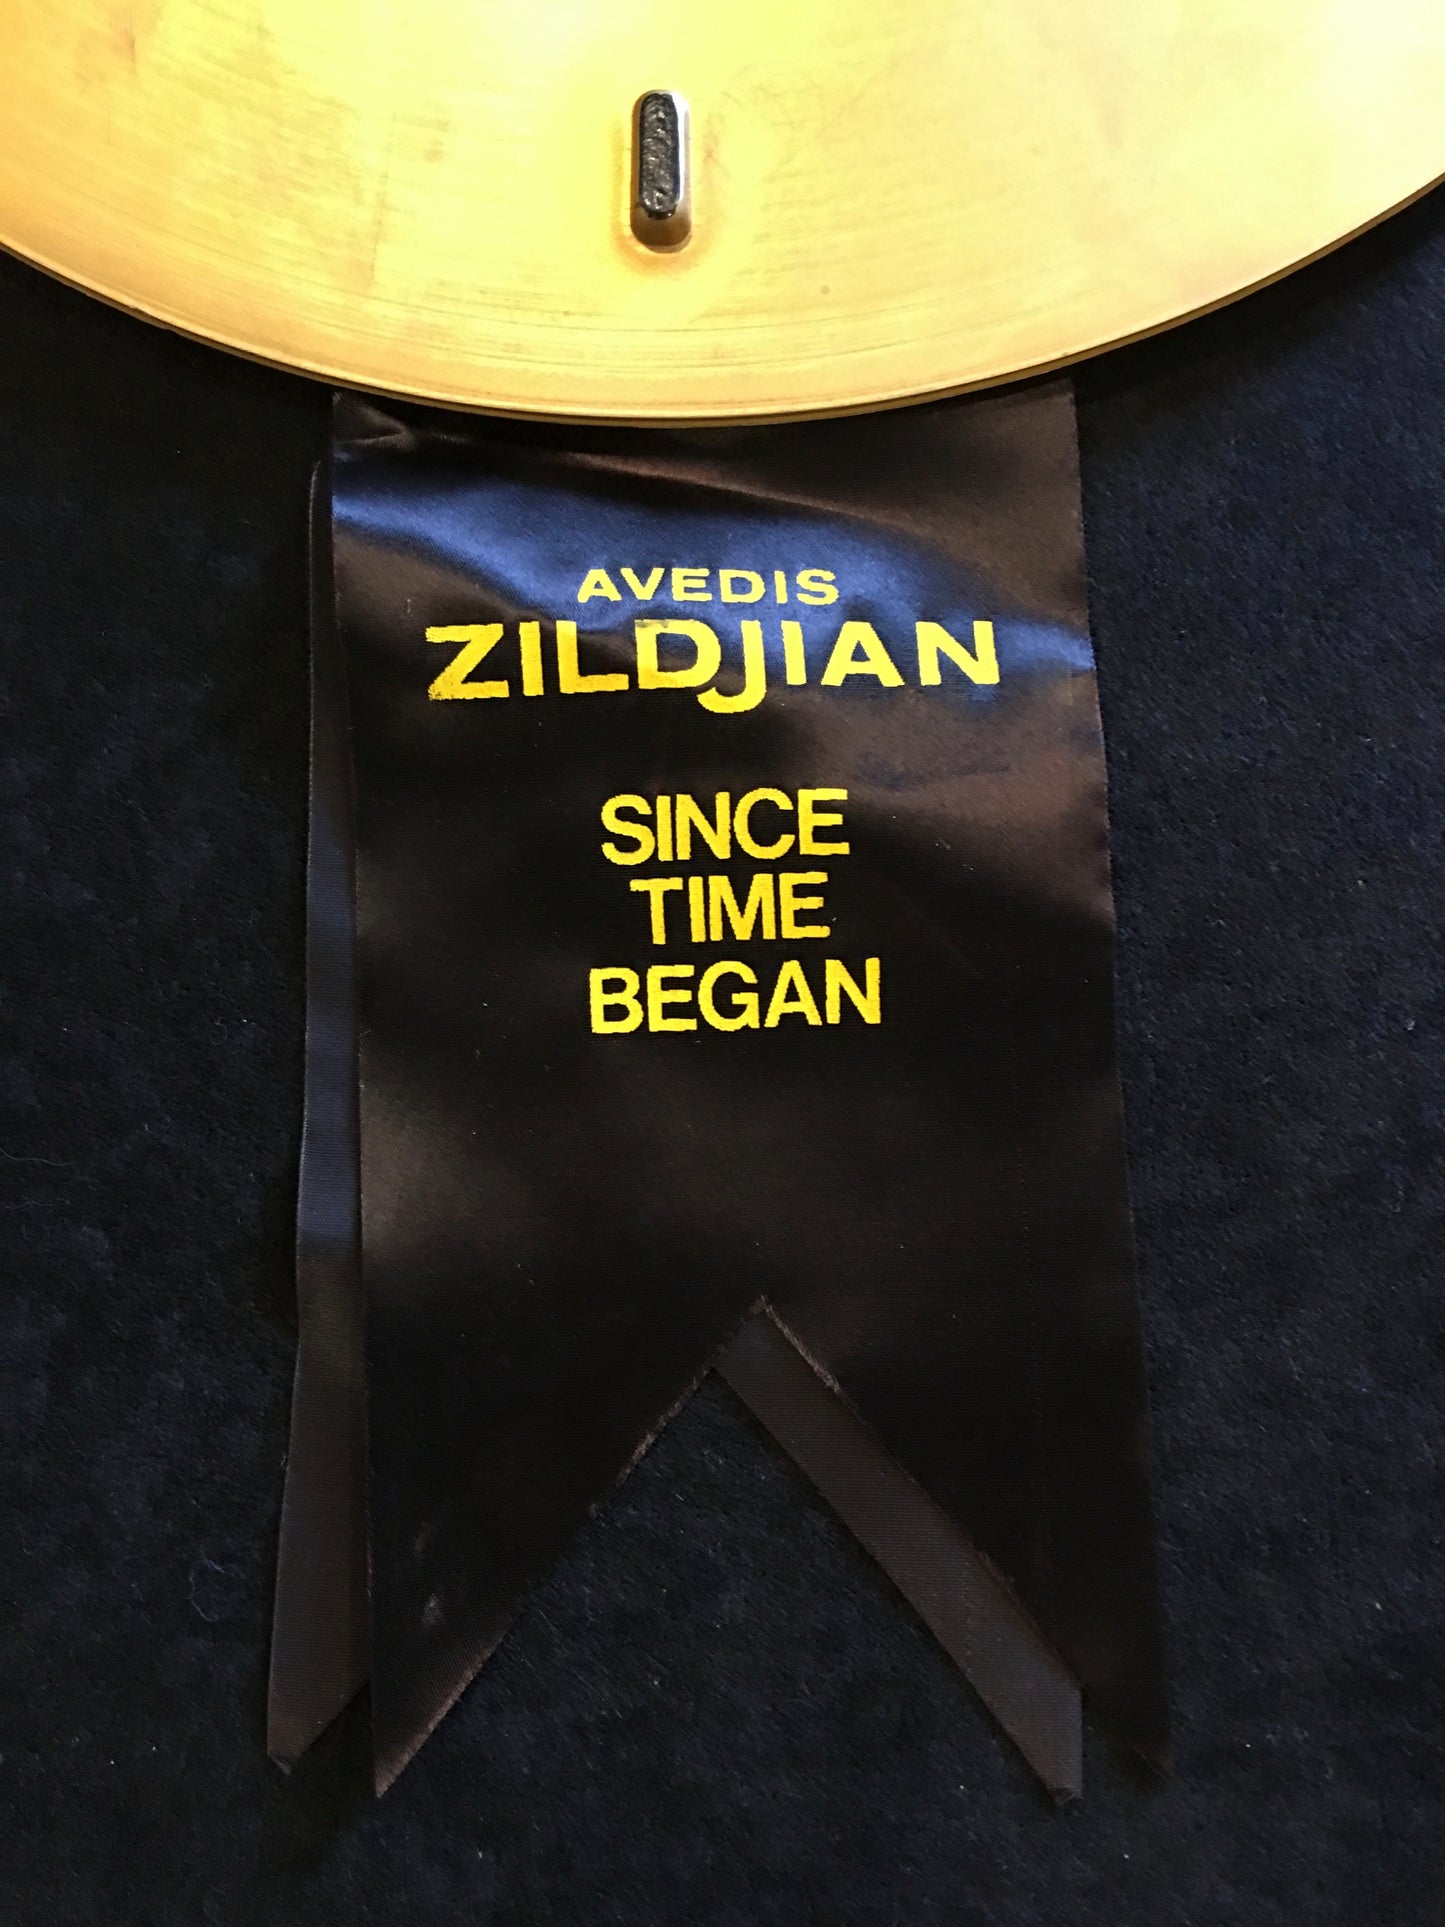 Vintage Avedis Zildjian "Since Time Began" Dealer Display Clock - Rare Find! NOS